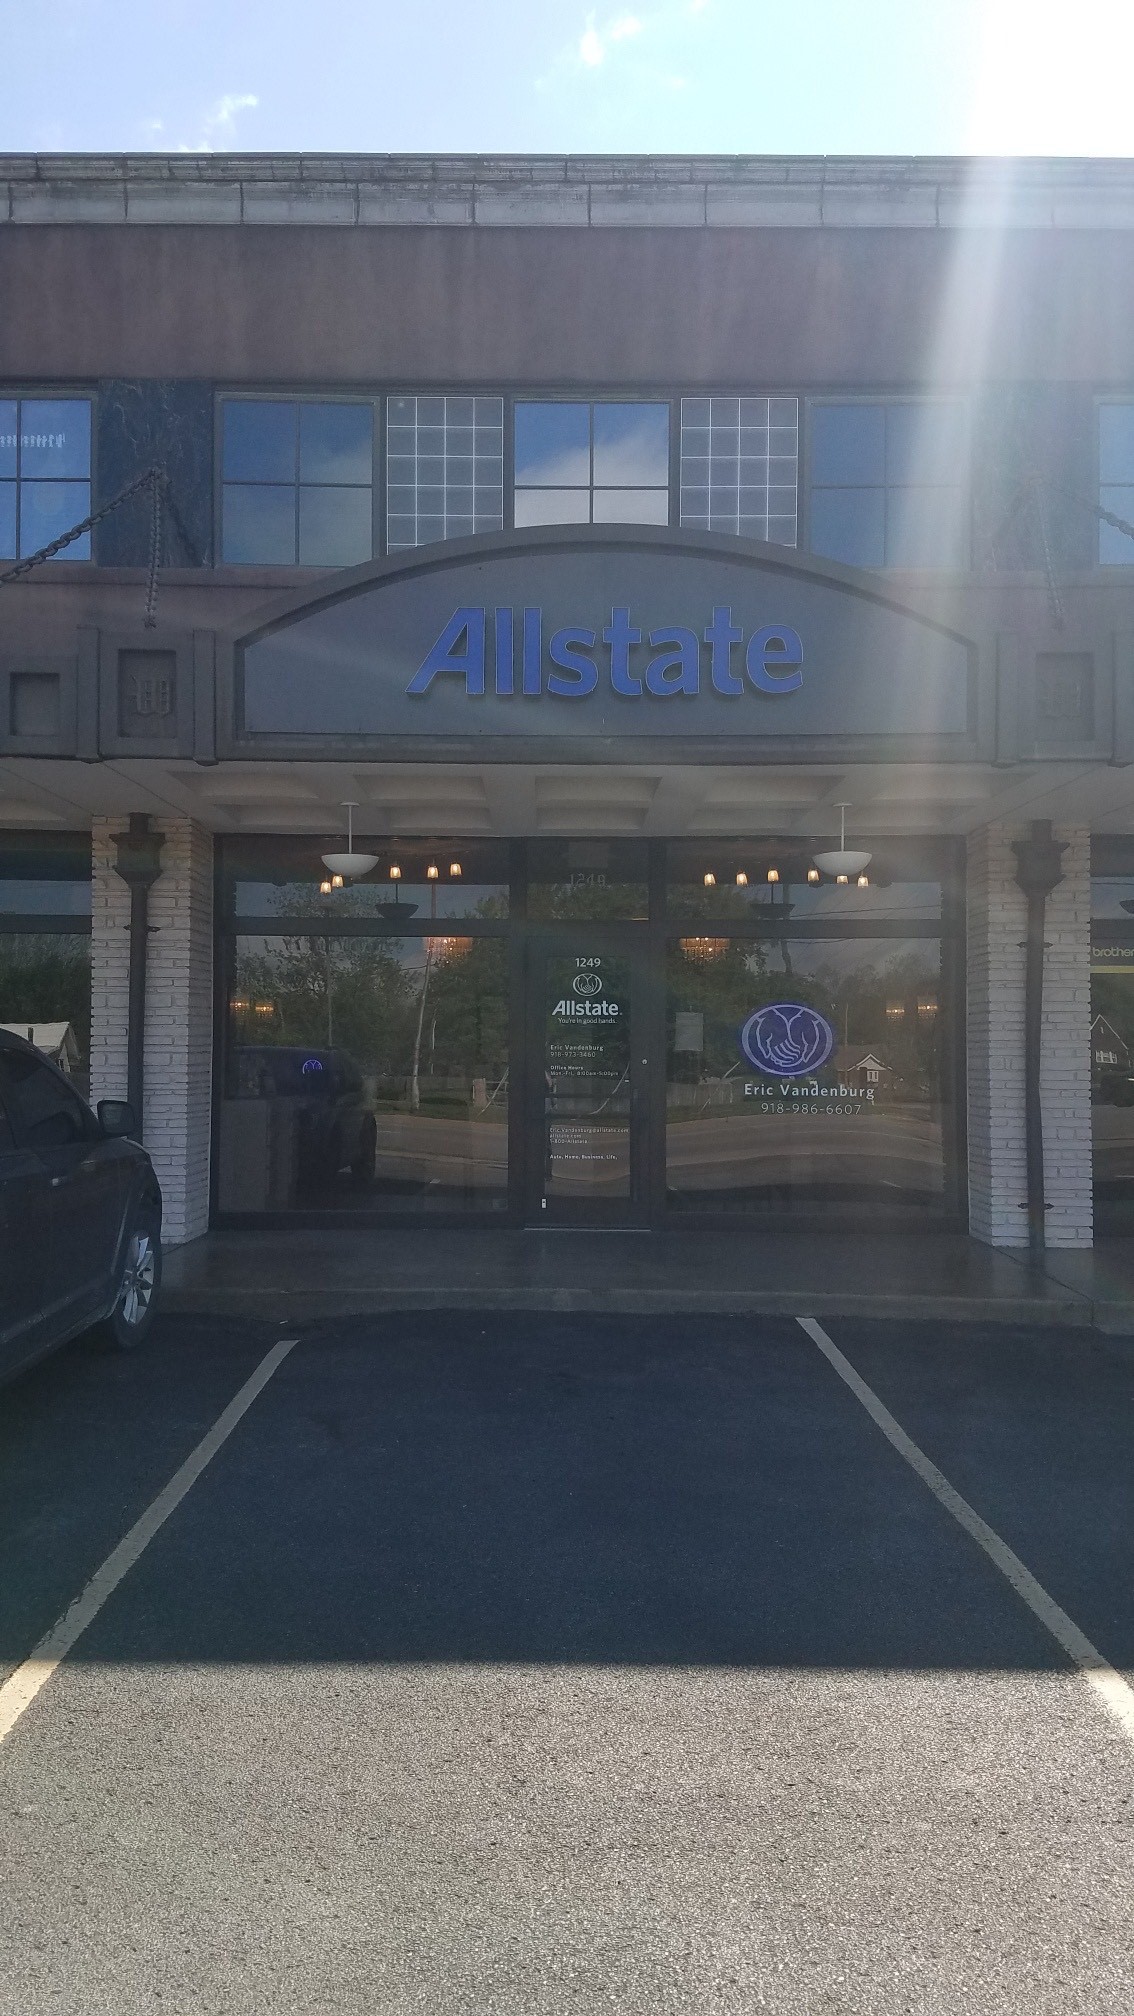 Eric Vandenburg: Allstate Insurance Photo